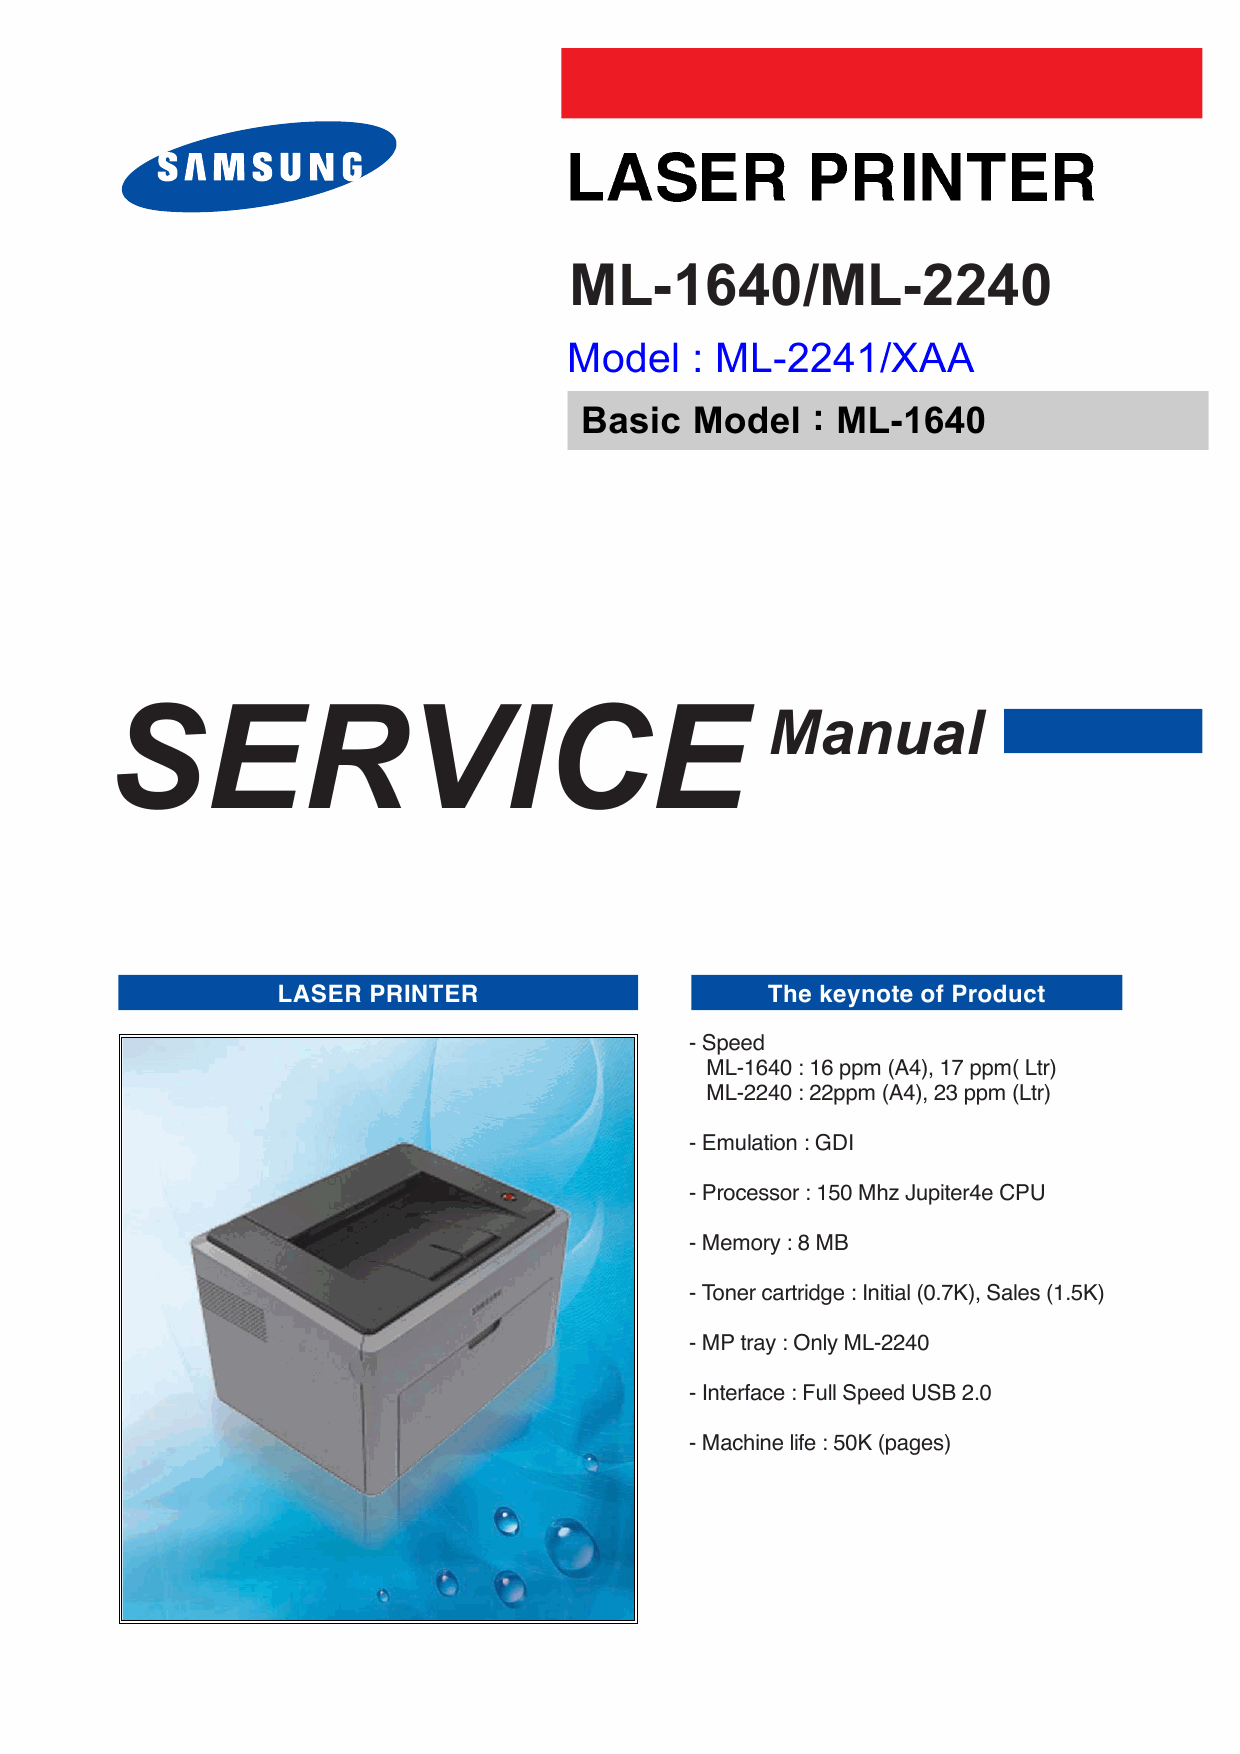 Samsung Laser-Printer ML-2241 Parts and Service Manual-1